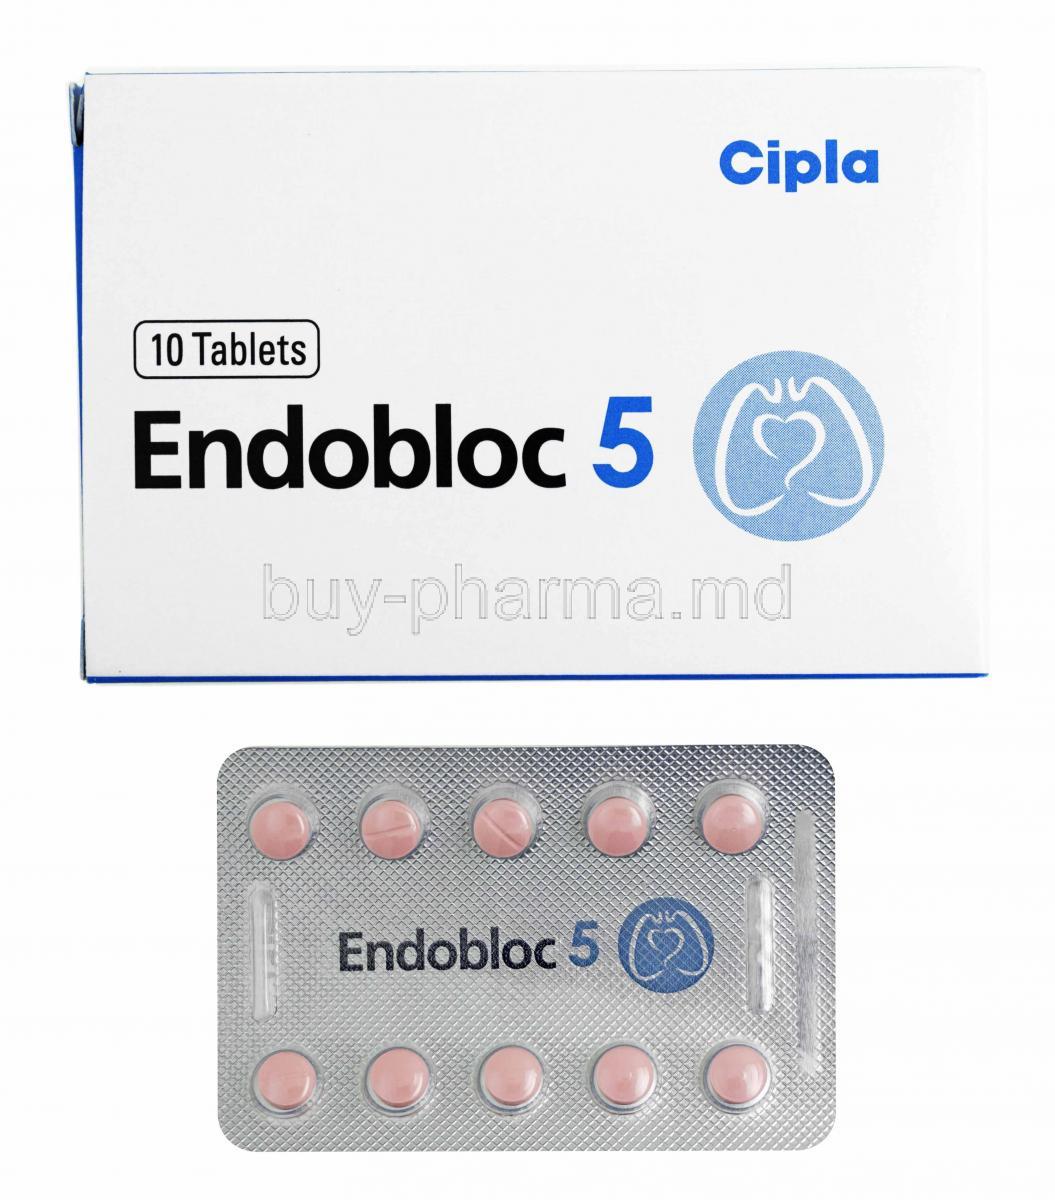 Endobloc, Ambrisentan 5mg box and tablets